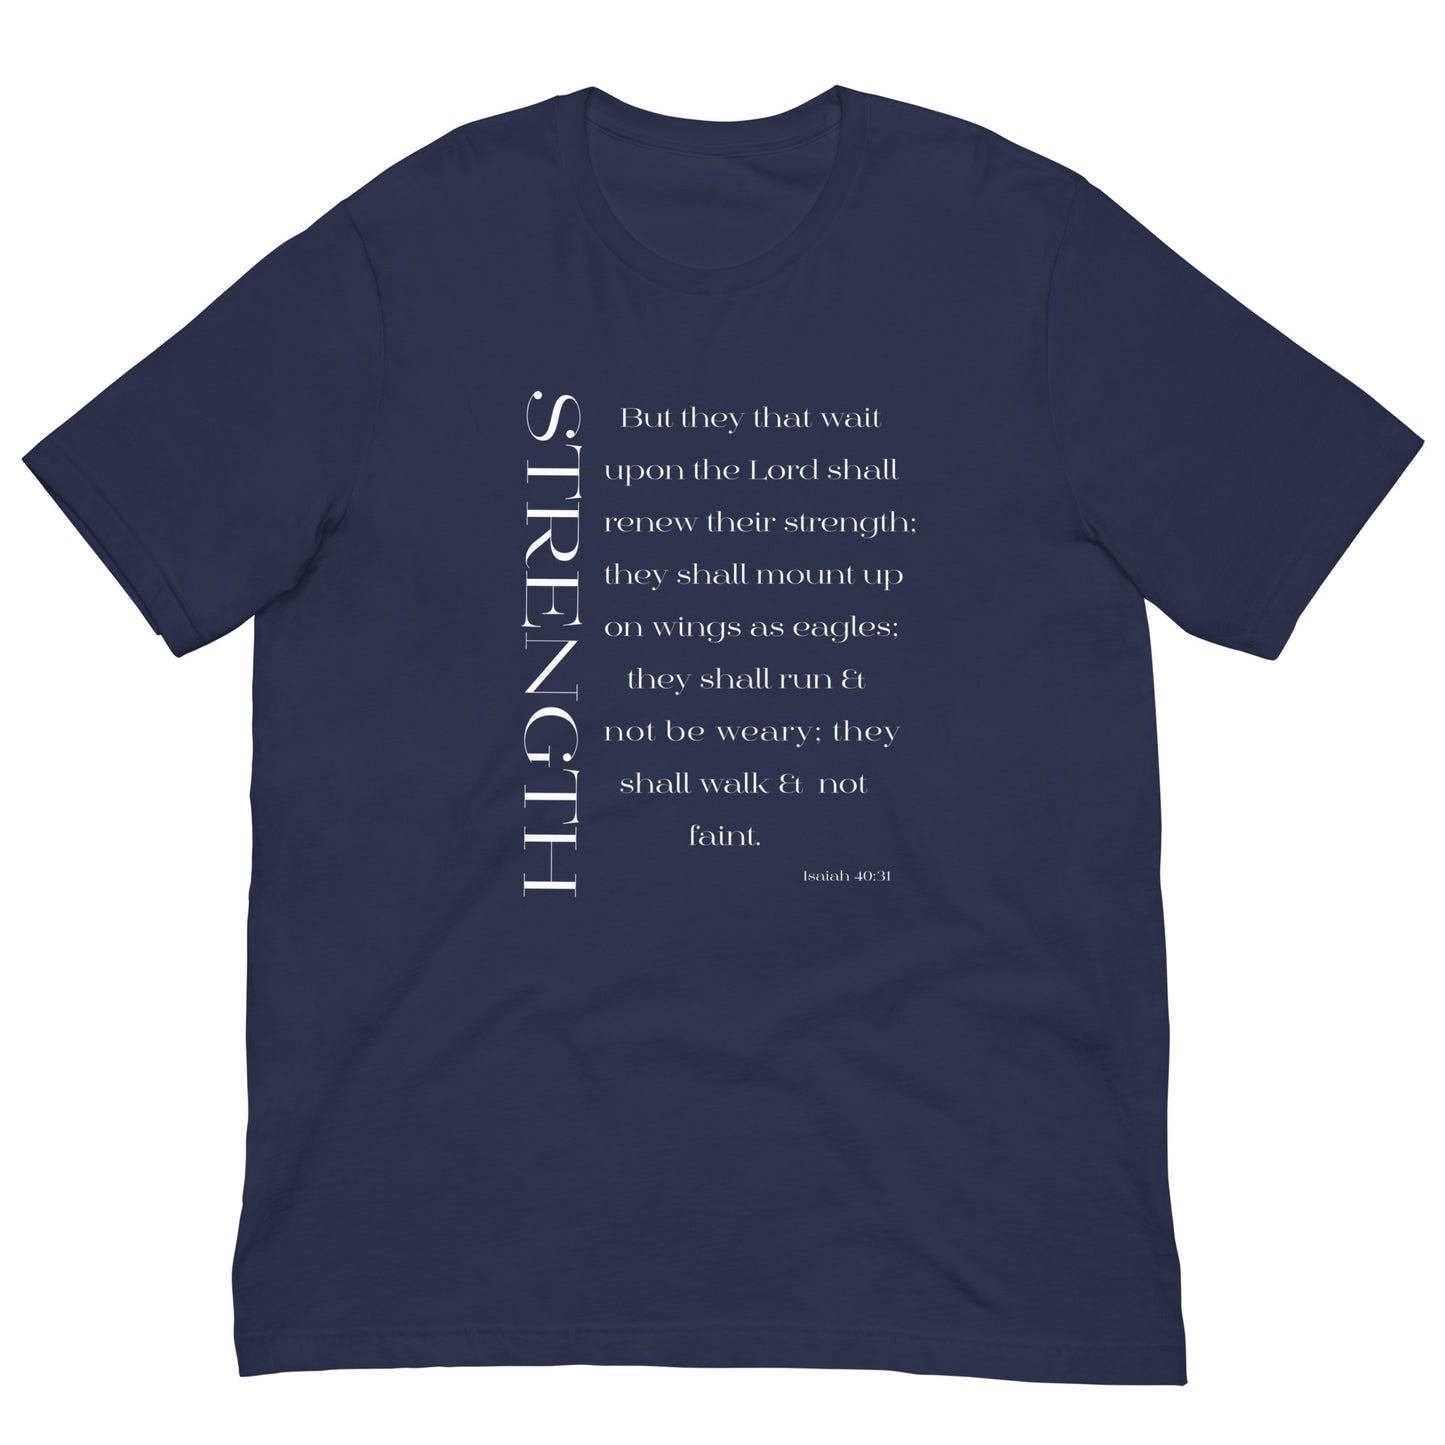 Isaiah 40:31 Strength Short-Sleeve Unisex T-Shirt navy